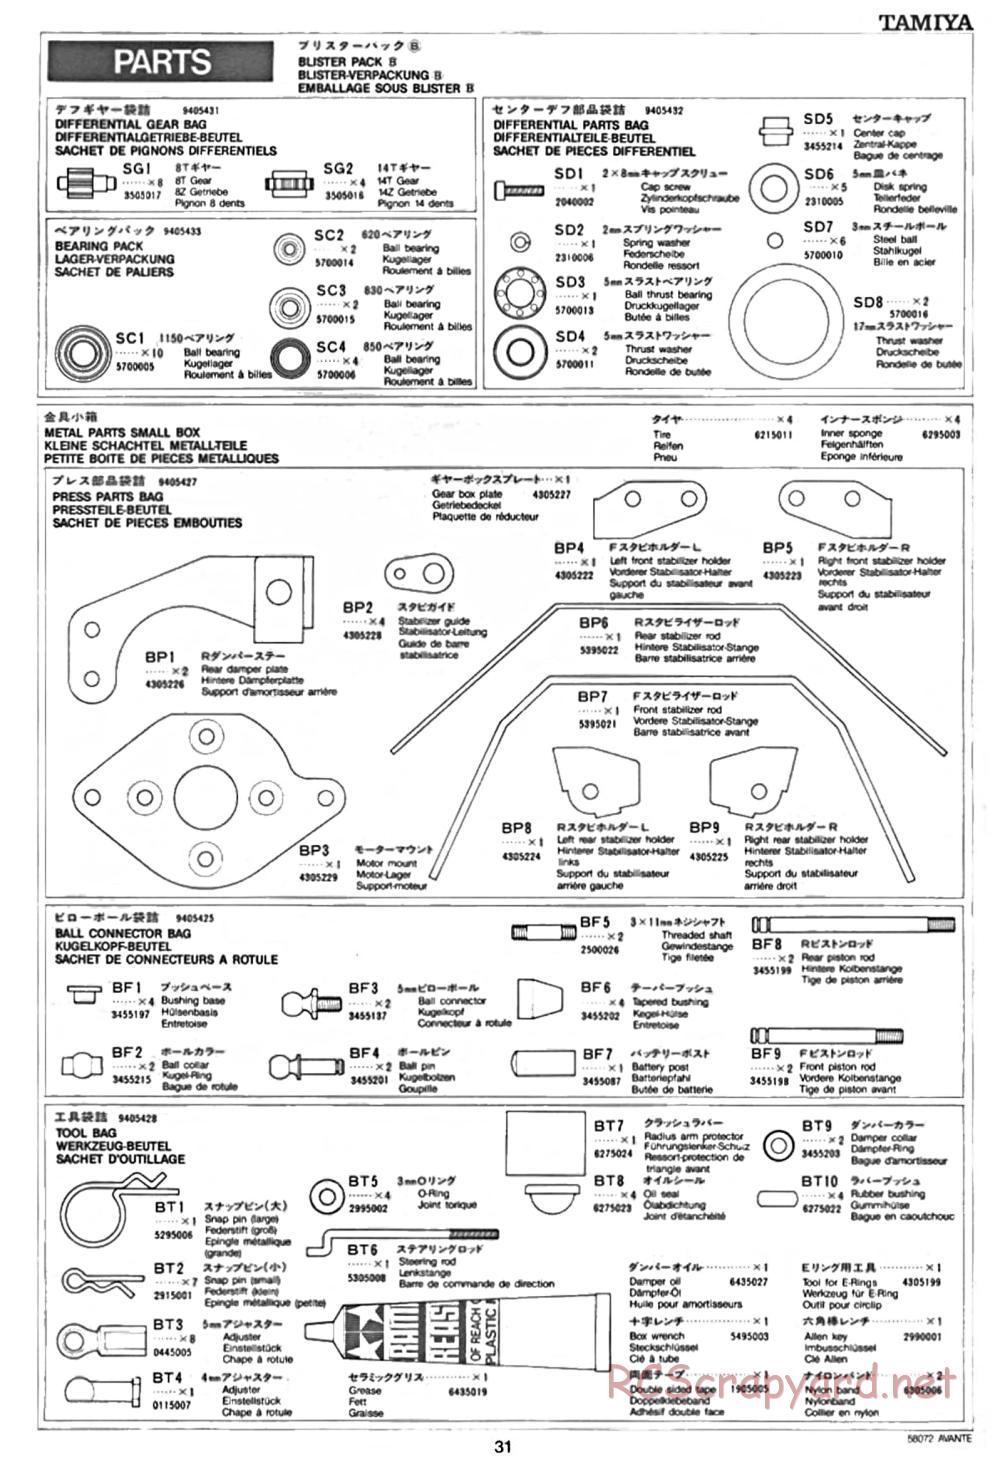 Tamiya - Avante - 58072 - Manual - Page 31